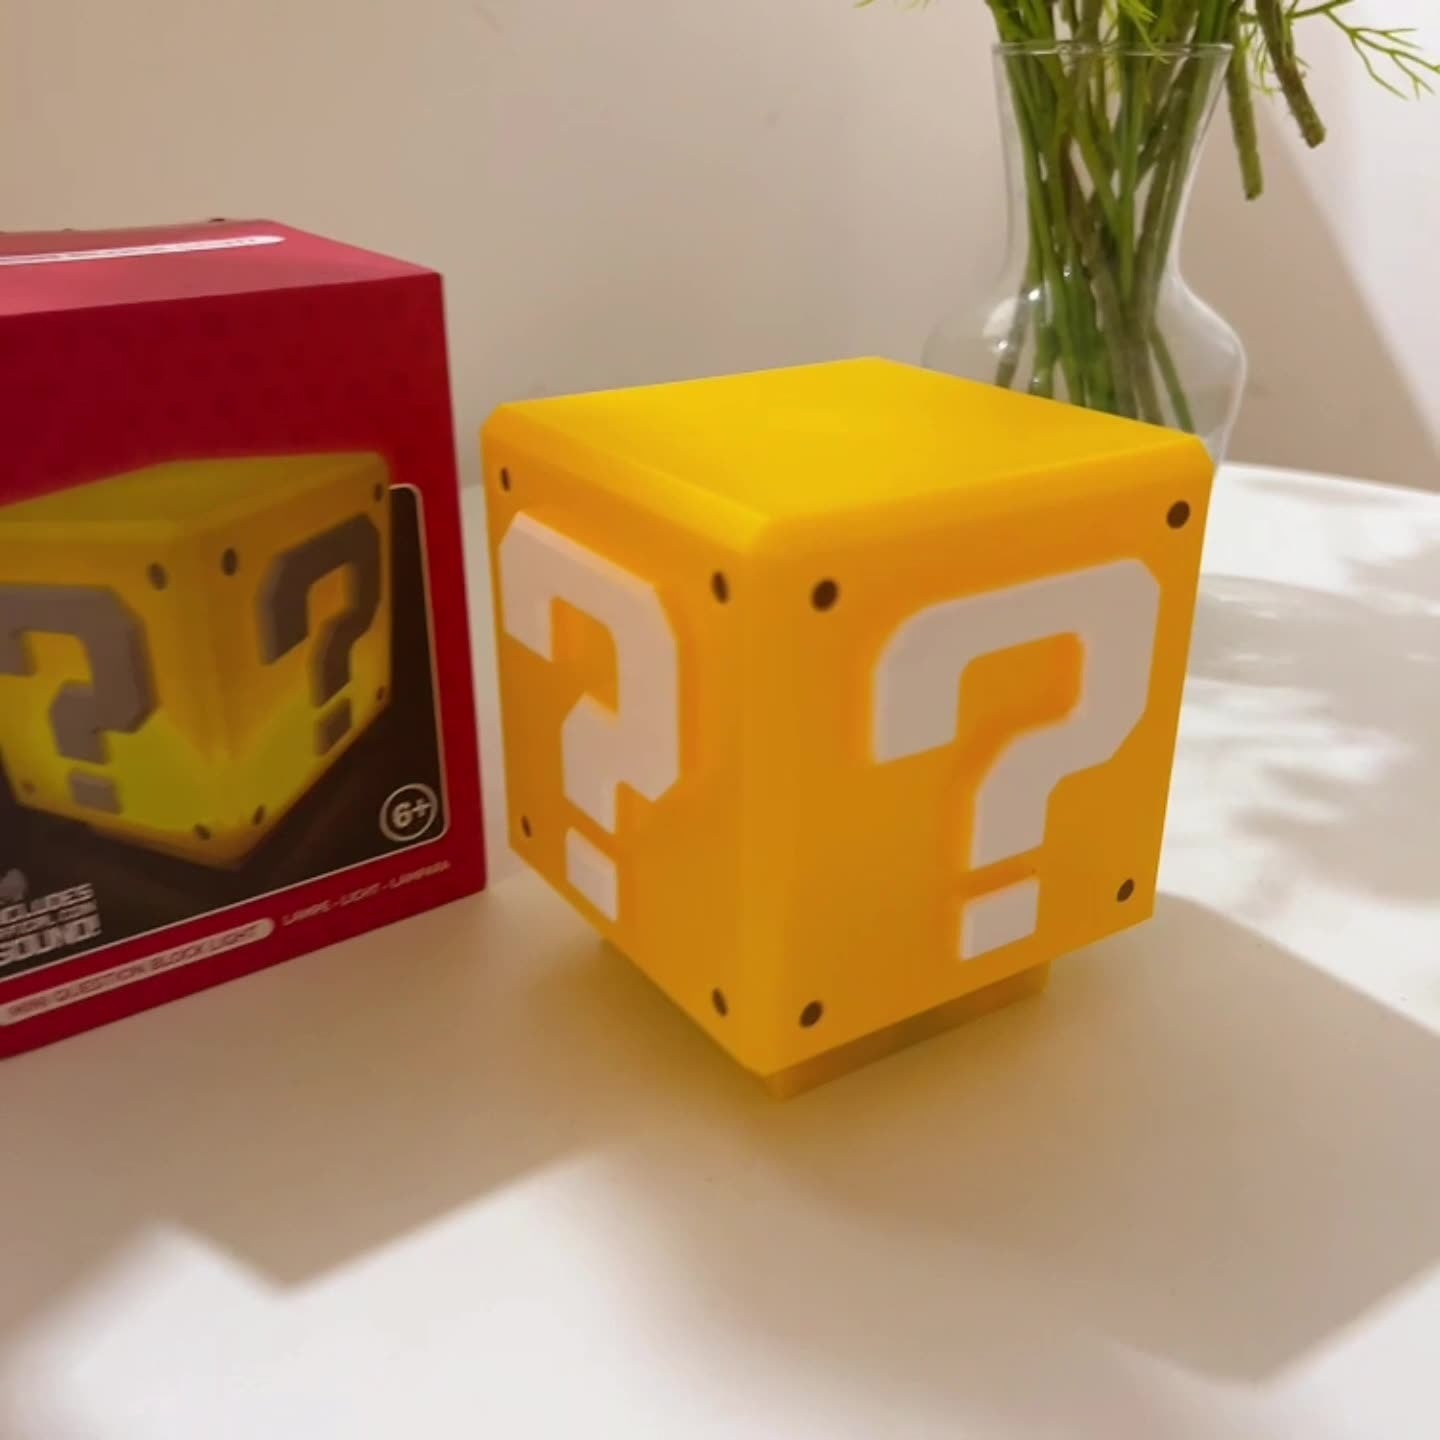 Mario 3D Box Light